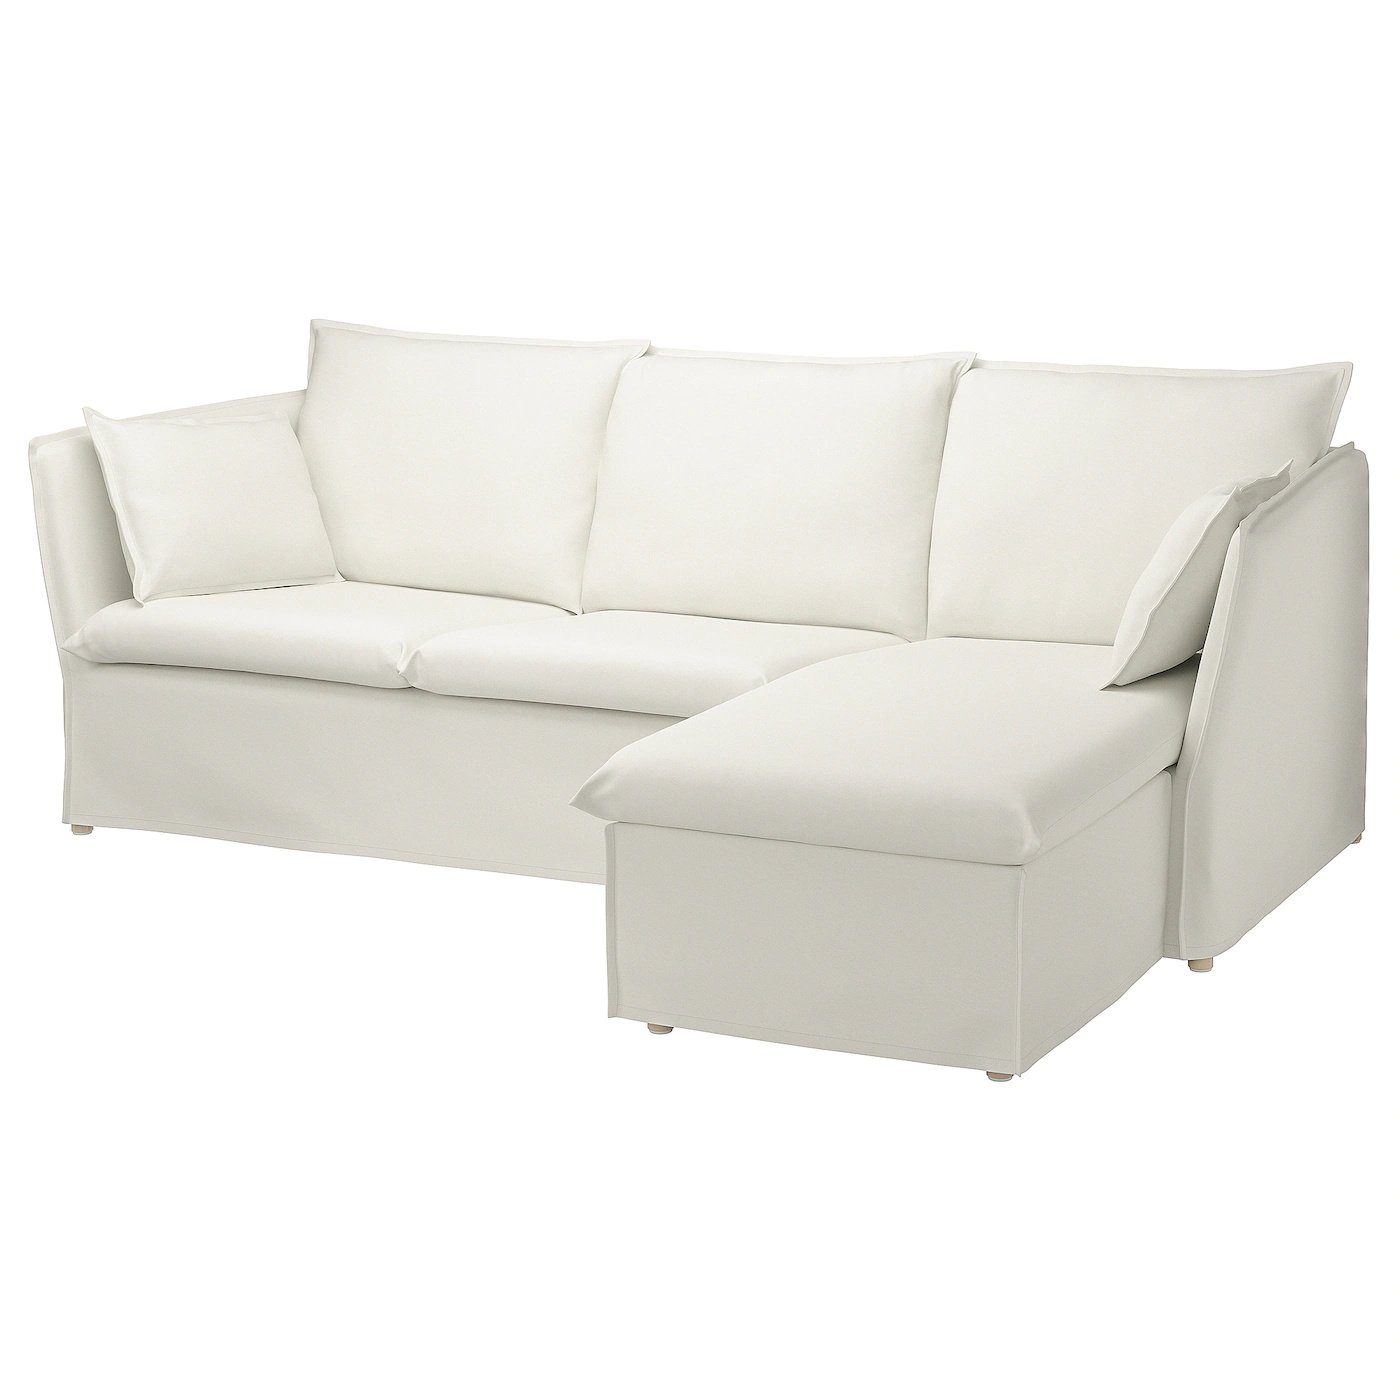 Backsälen 3er-Sofa mit Récamiere - Blekinge weiß